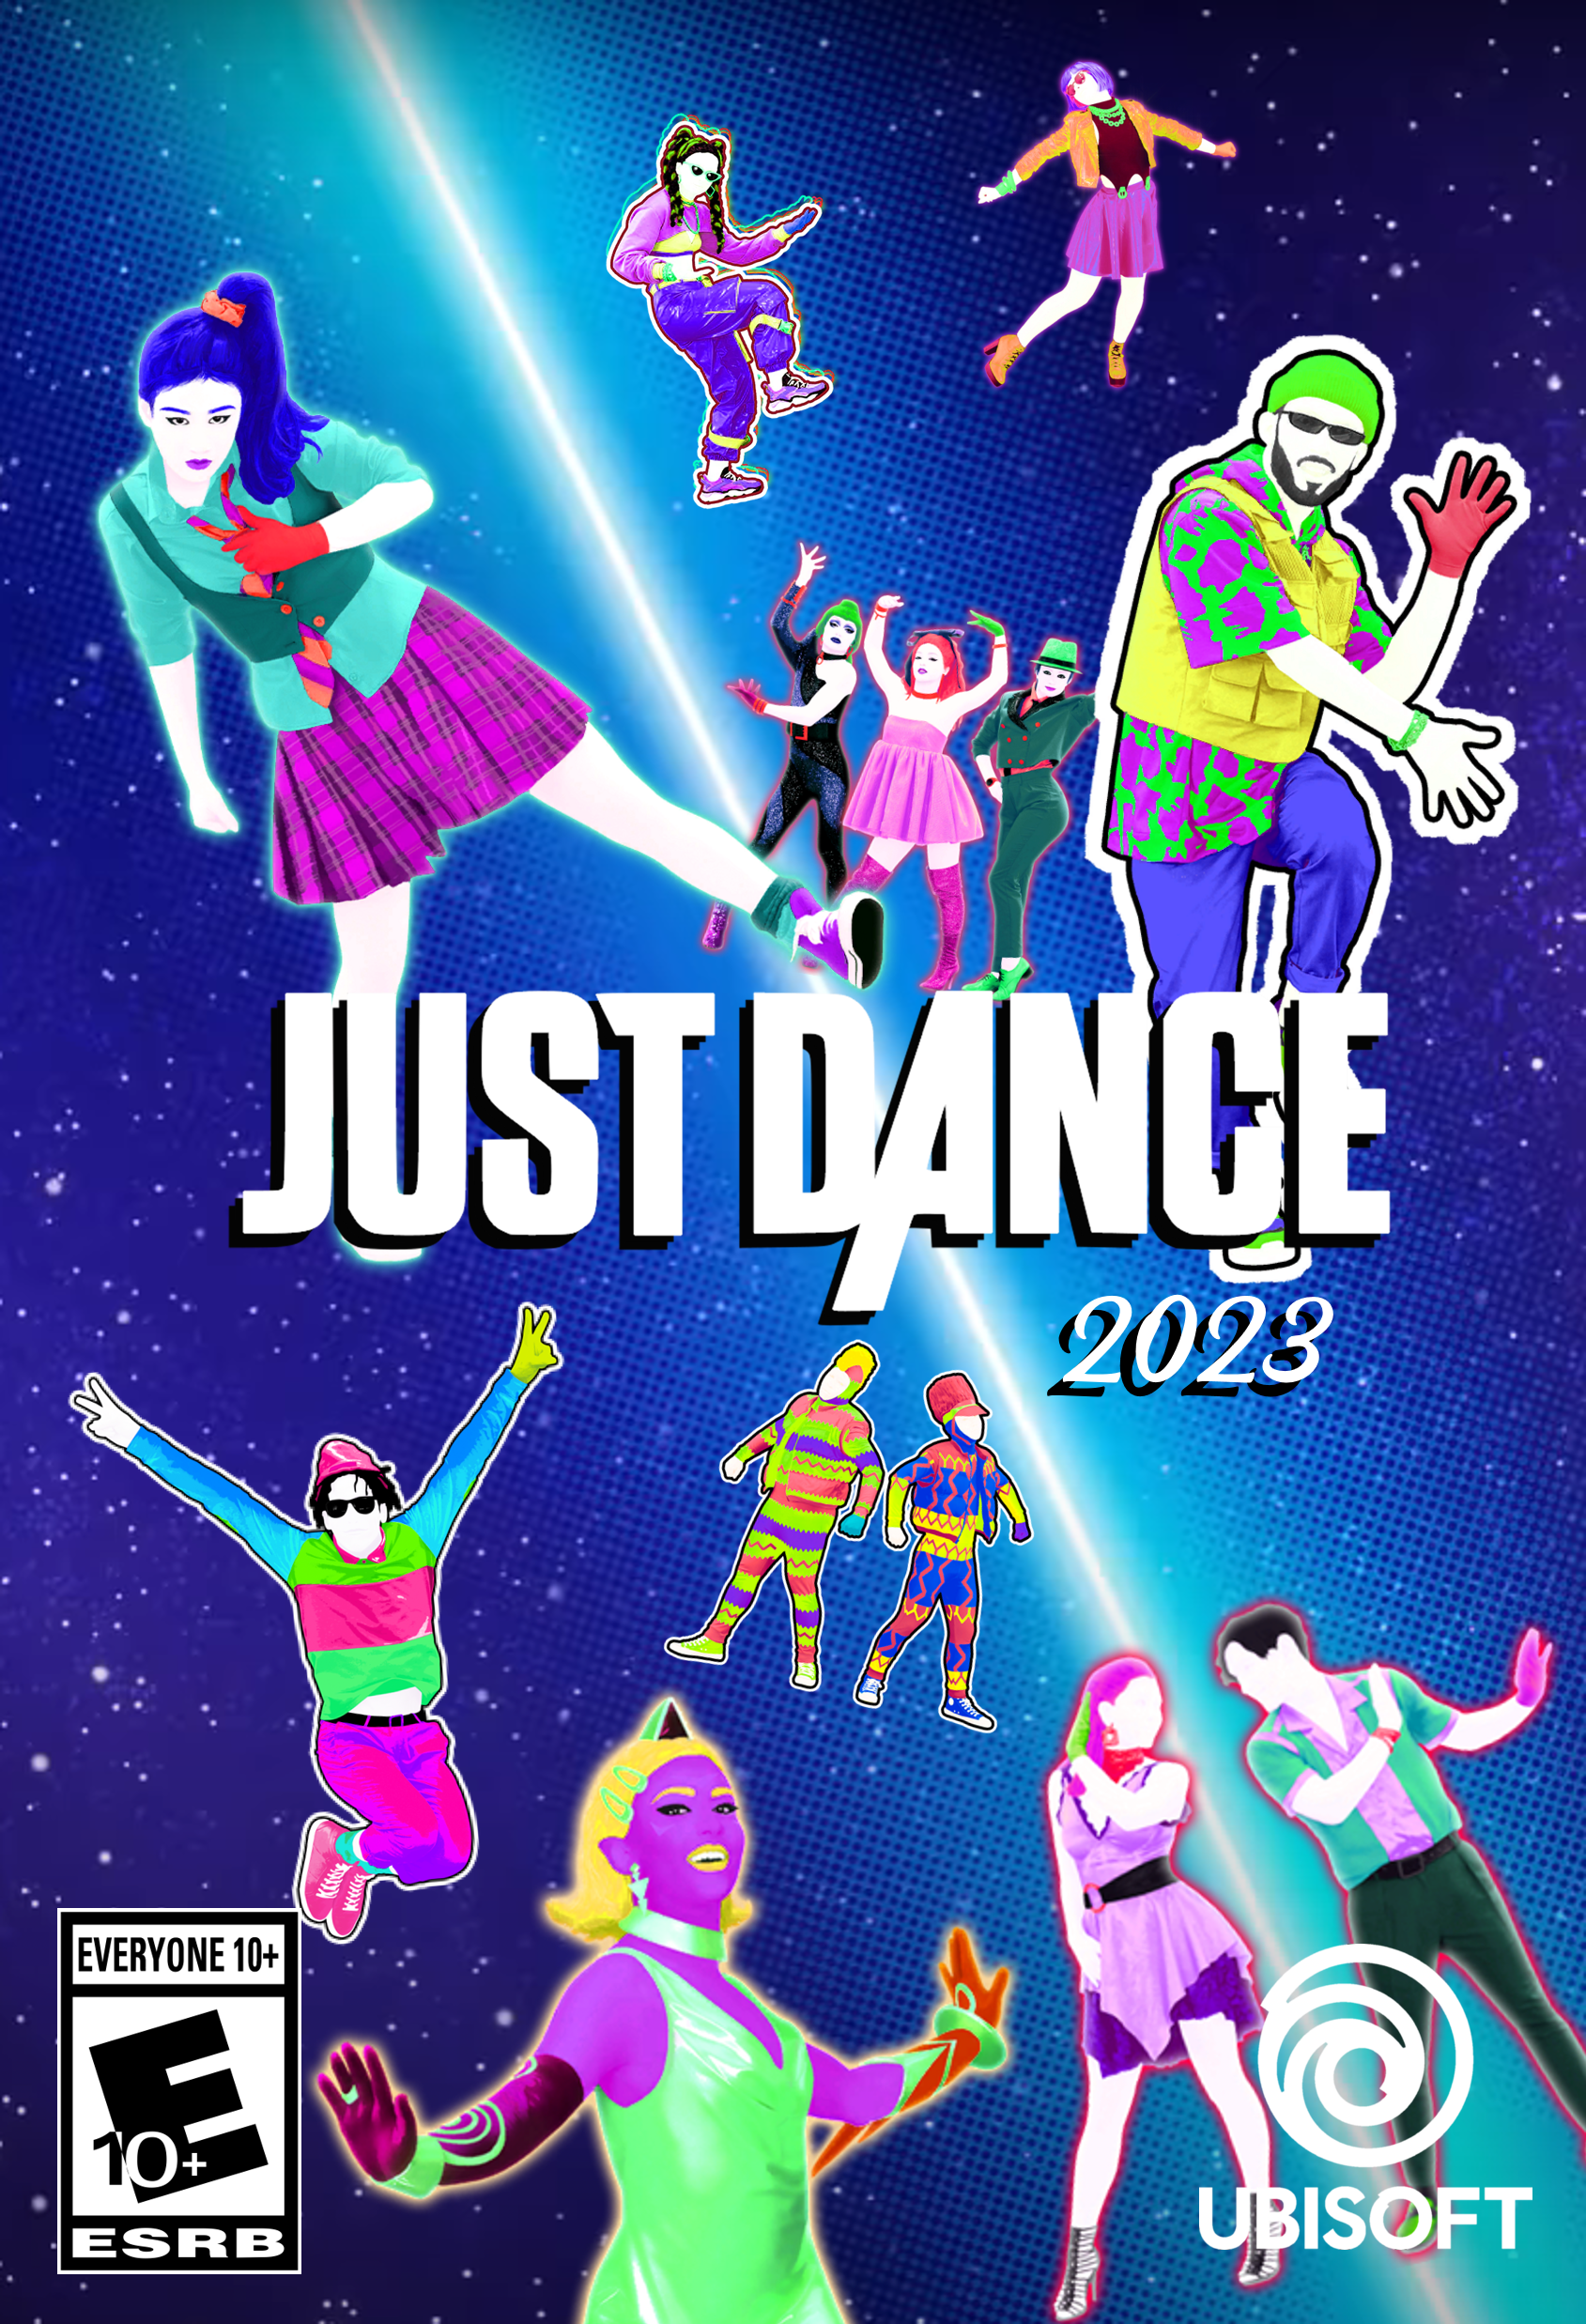 Just Dance® 2023 Edition